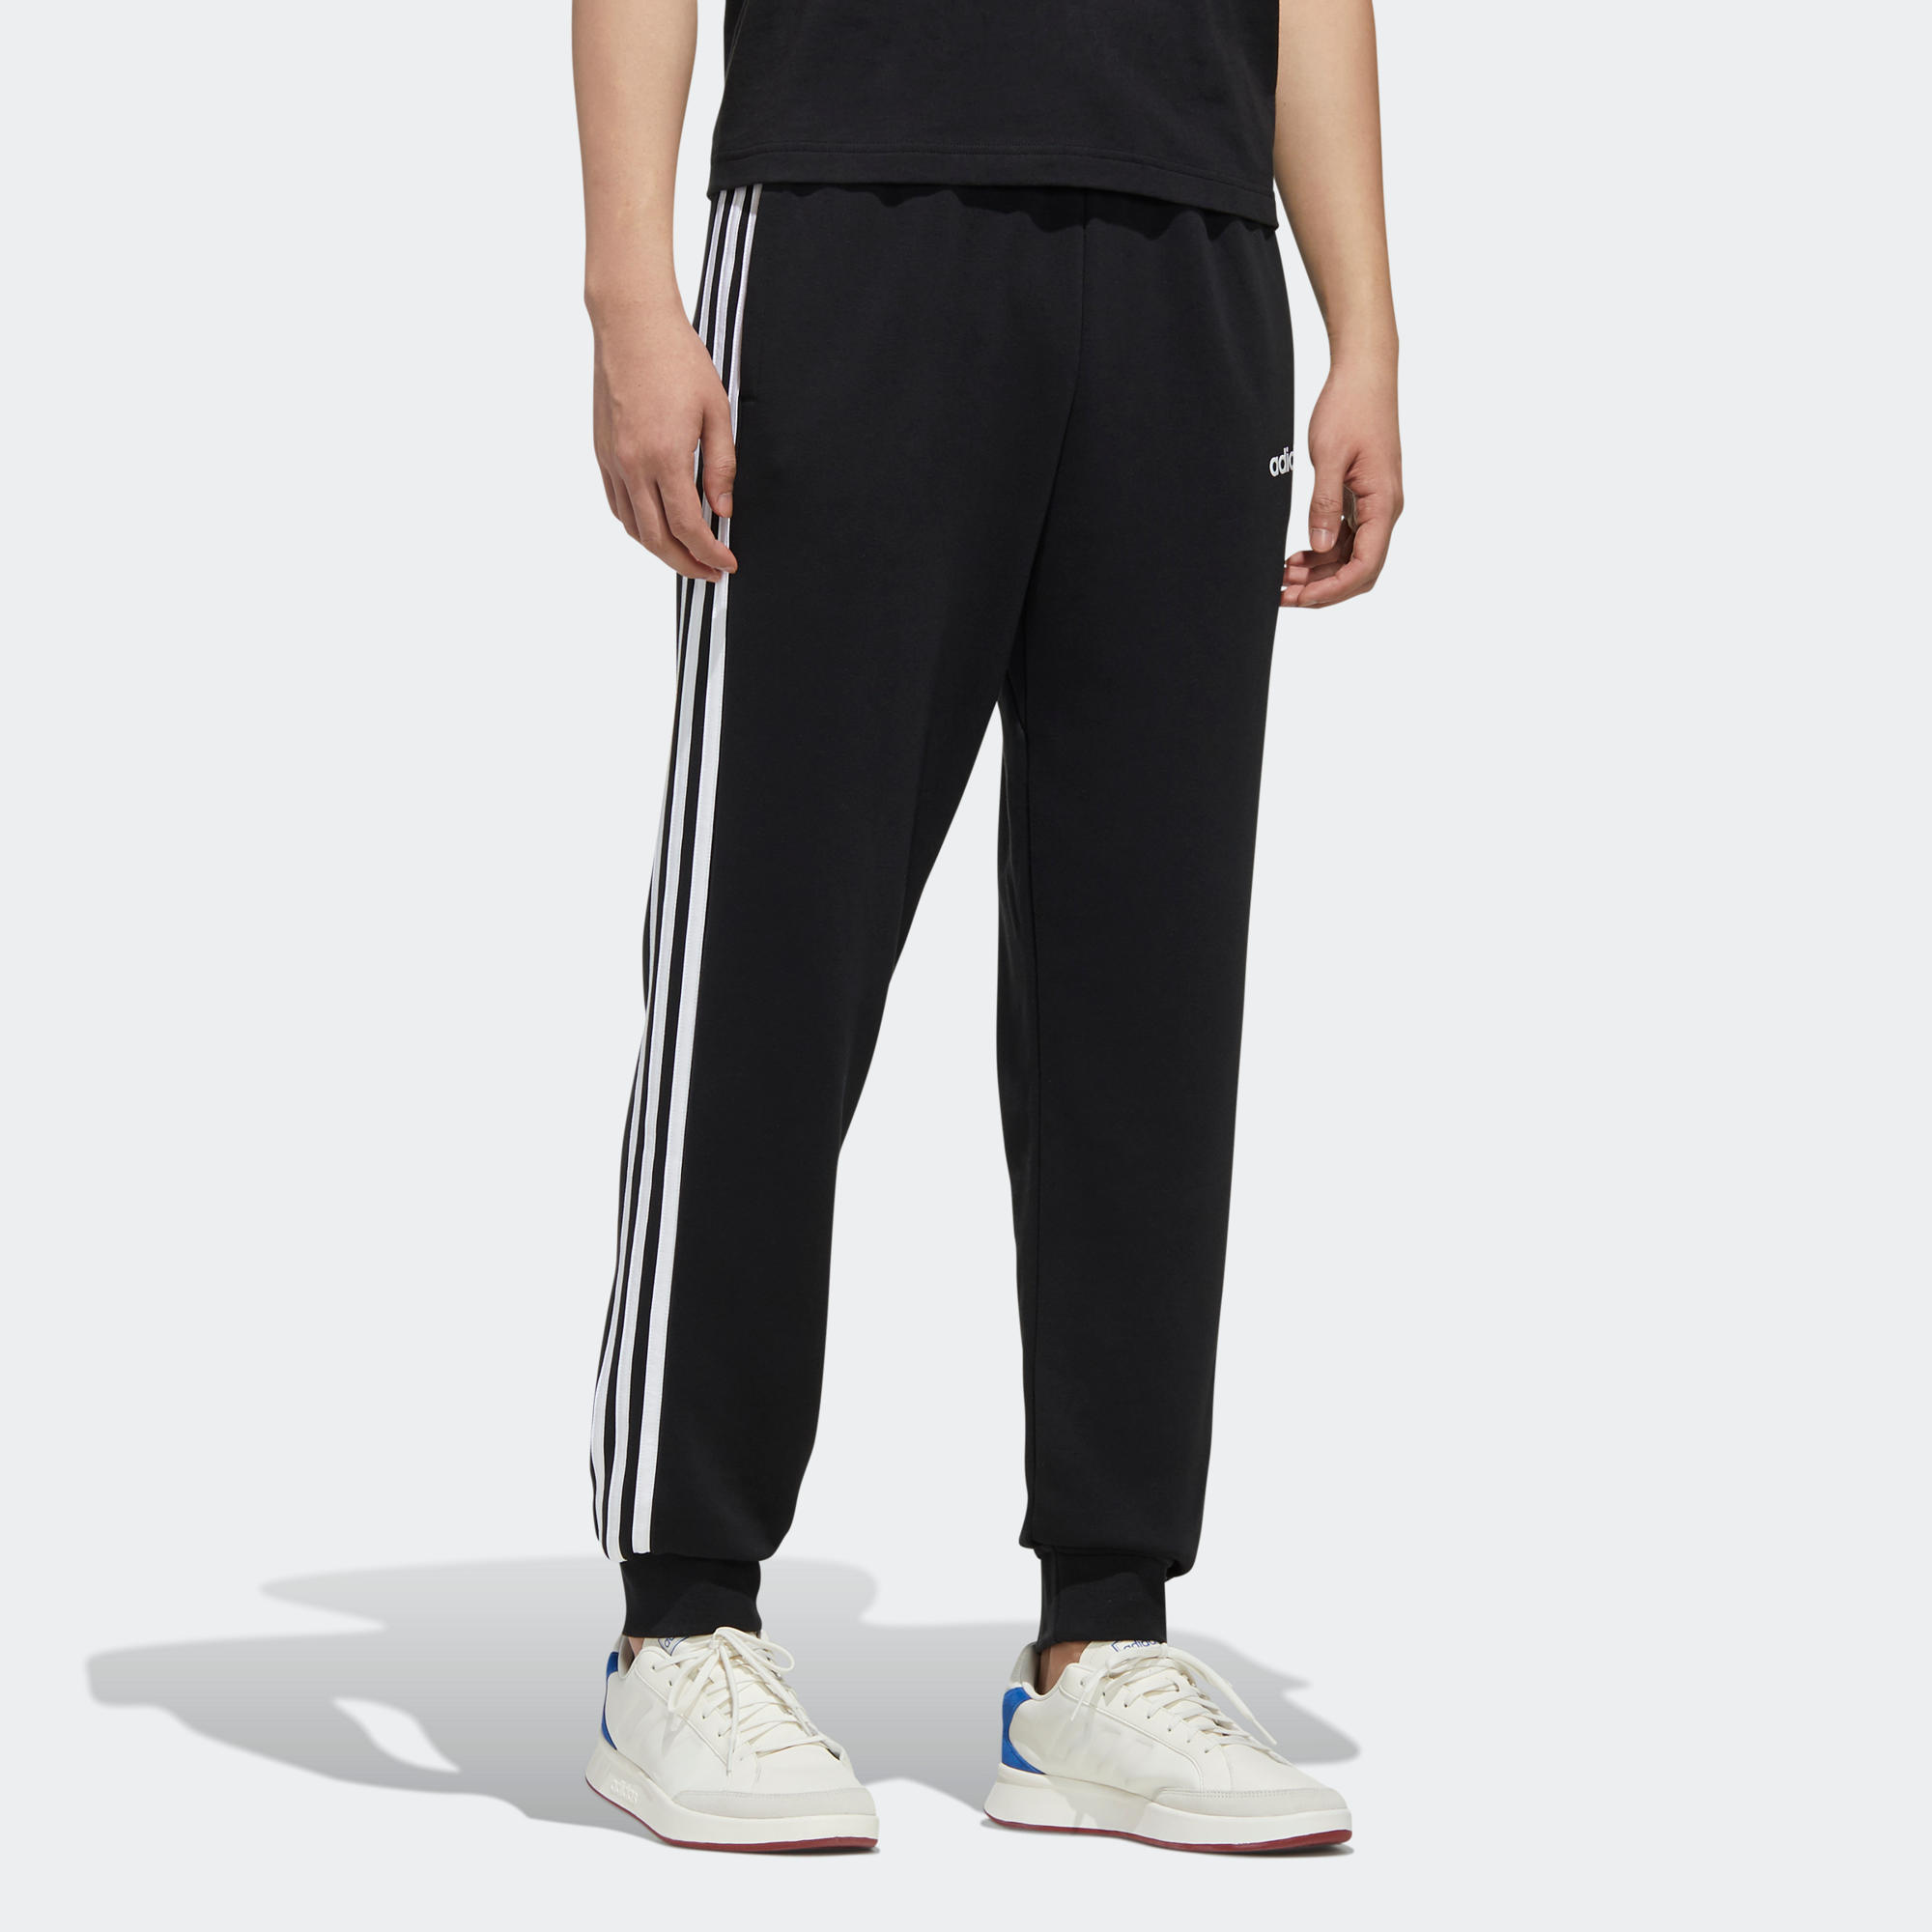 Pantalón chándal Adidas hombre 3S regular negro blanco ADIDAS | Decathlon